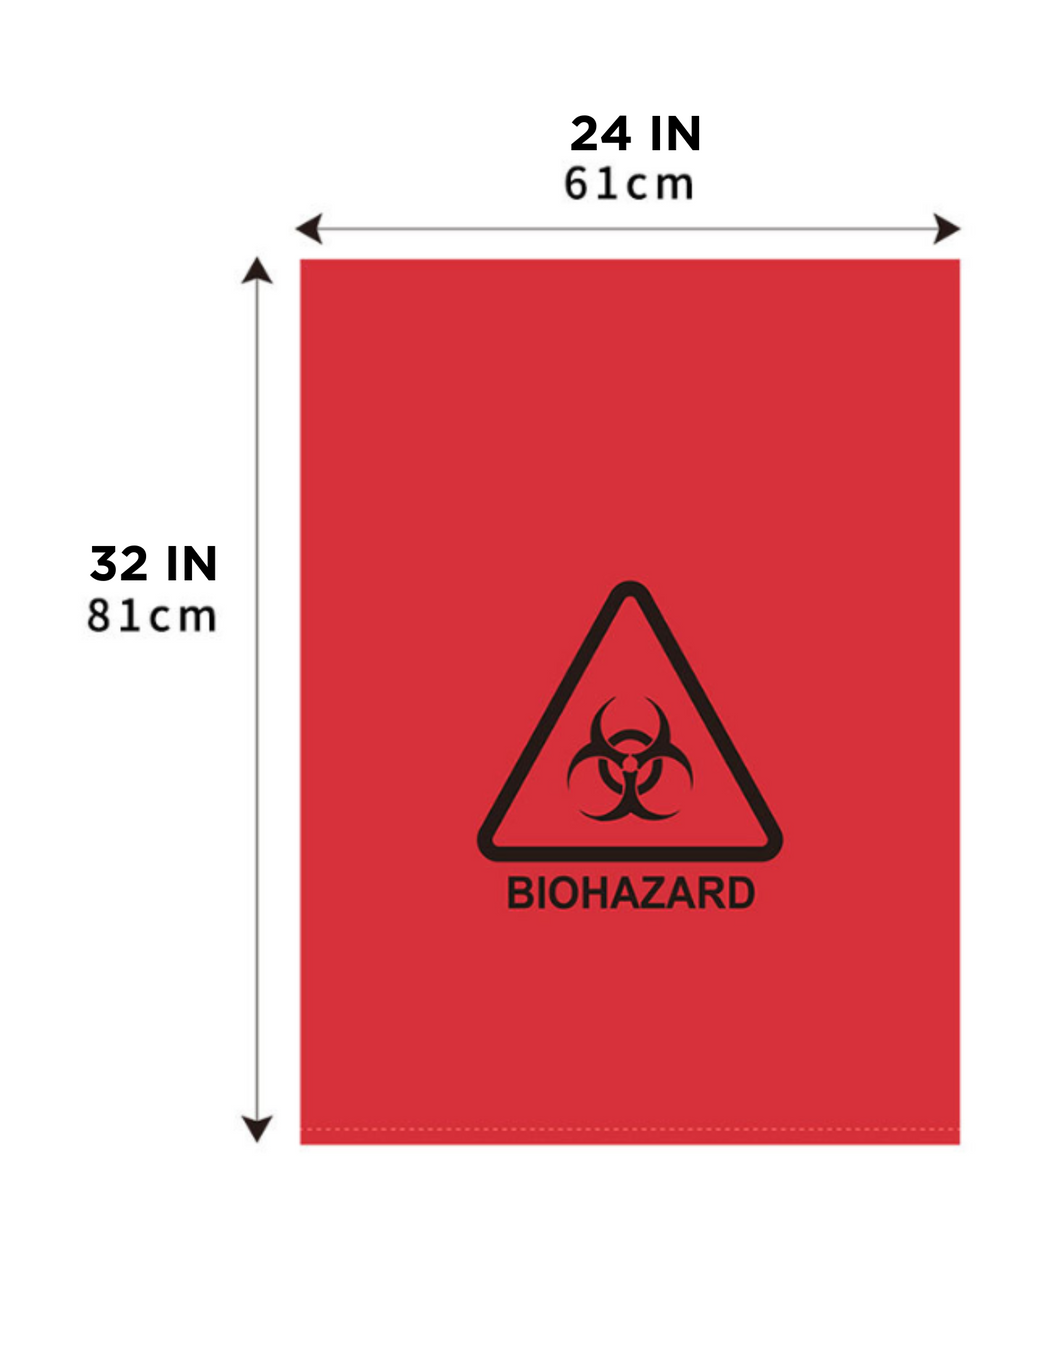 Autoclavable and Biohazard Bag (Flat Bag), Medium Size